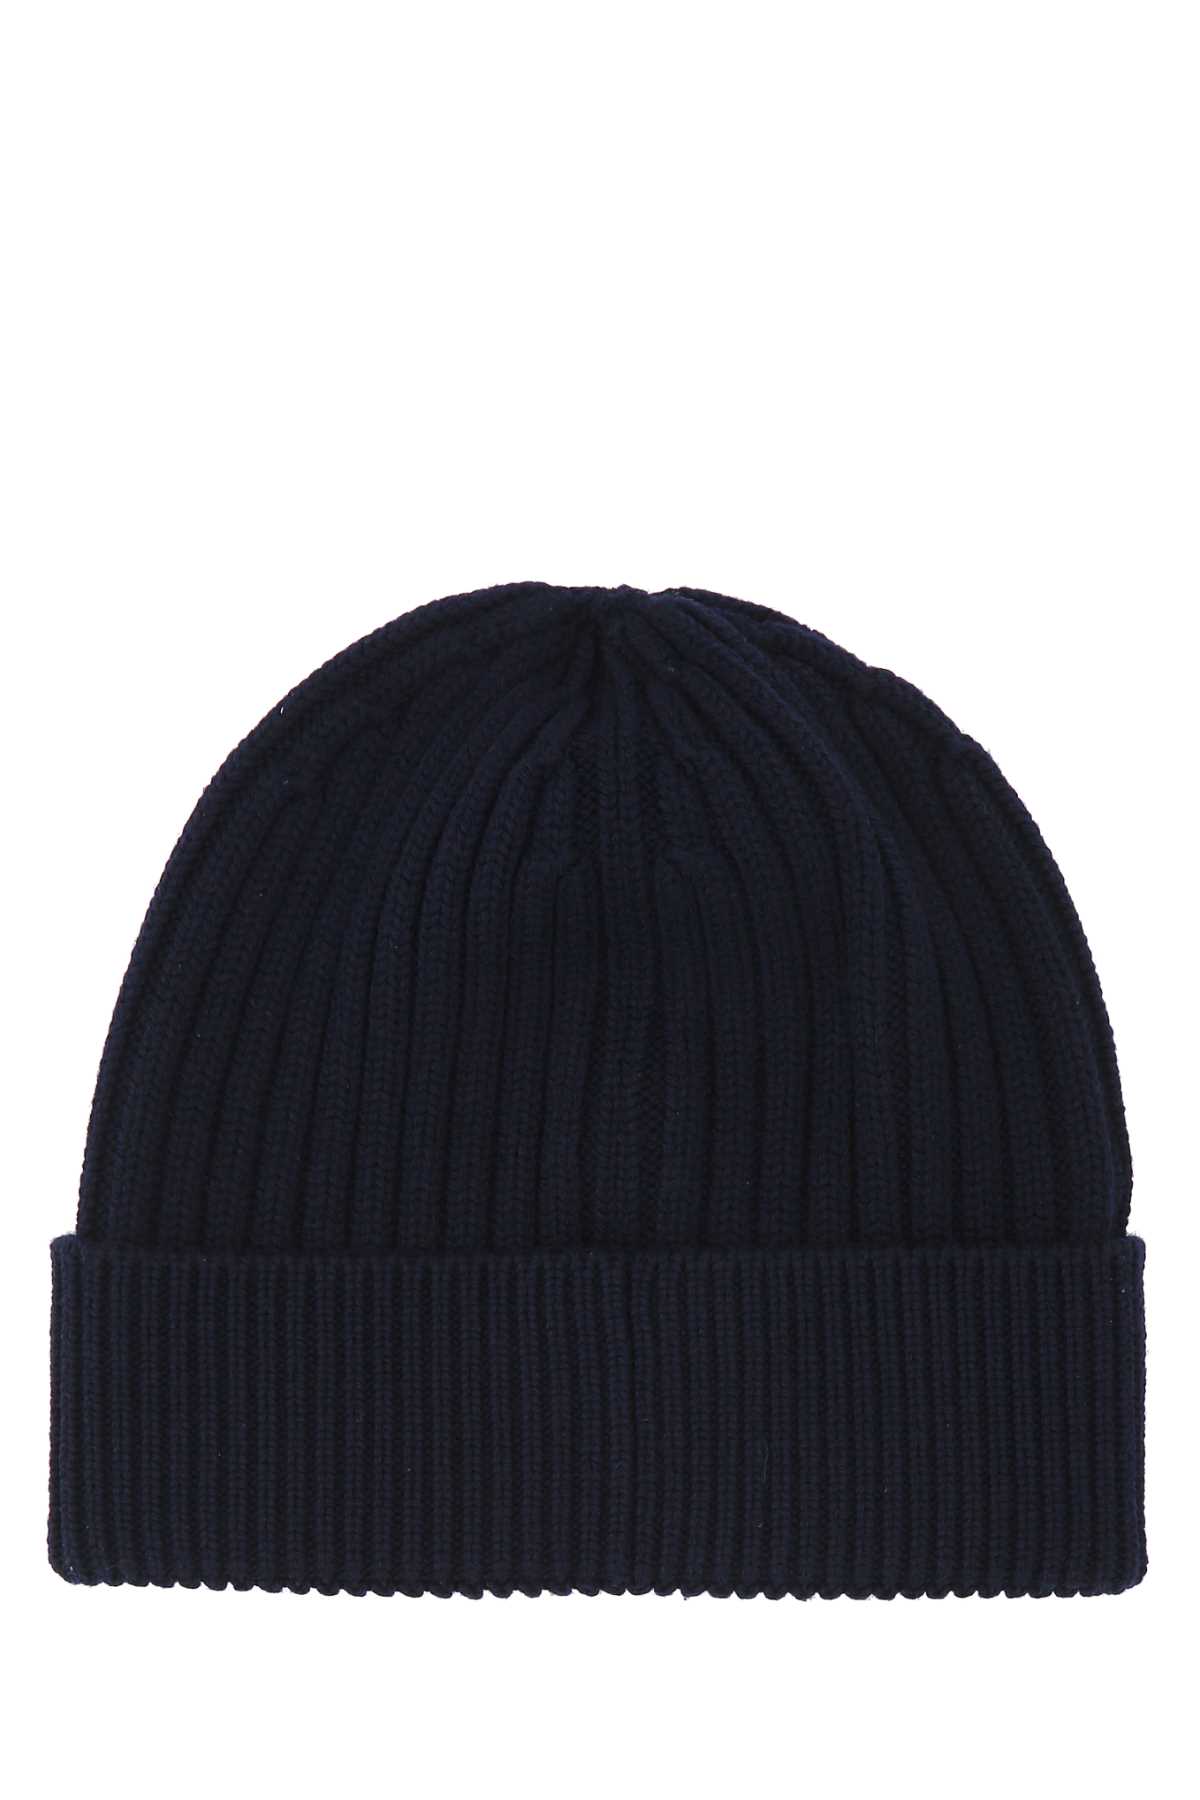 Moncler Navy Blue Wool Beanie Hat